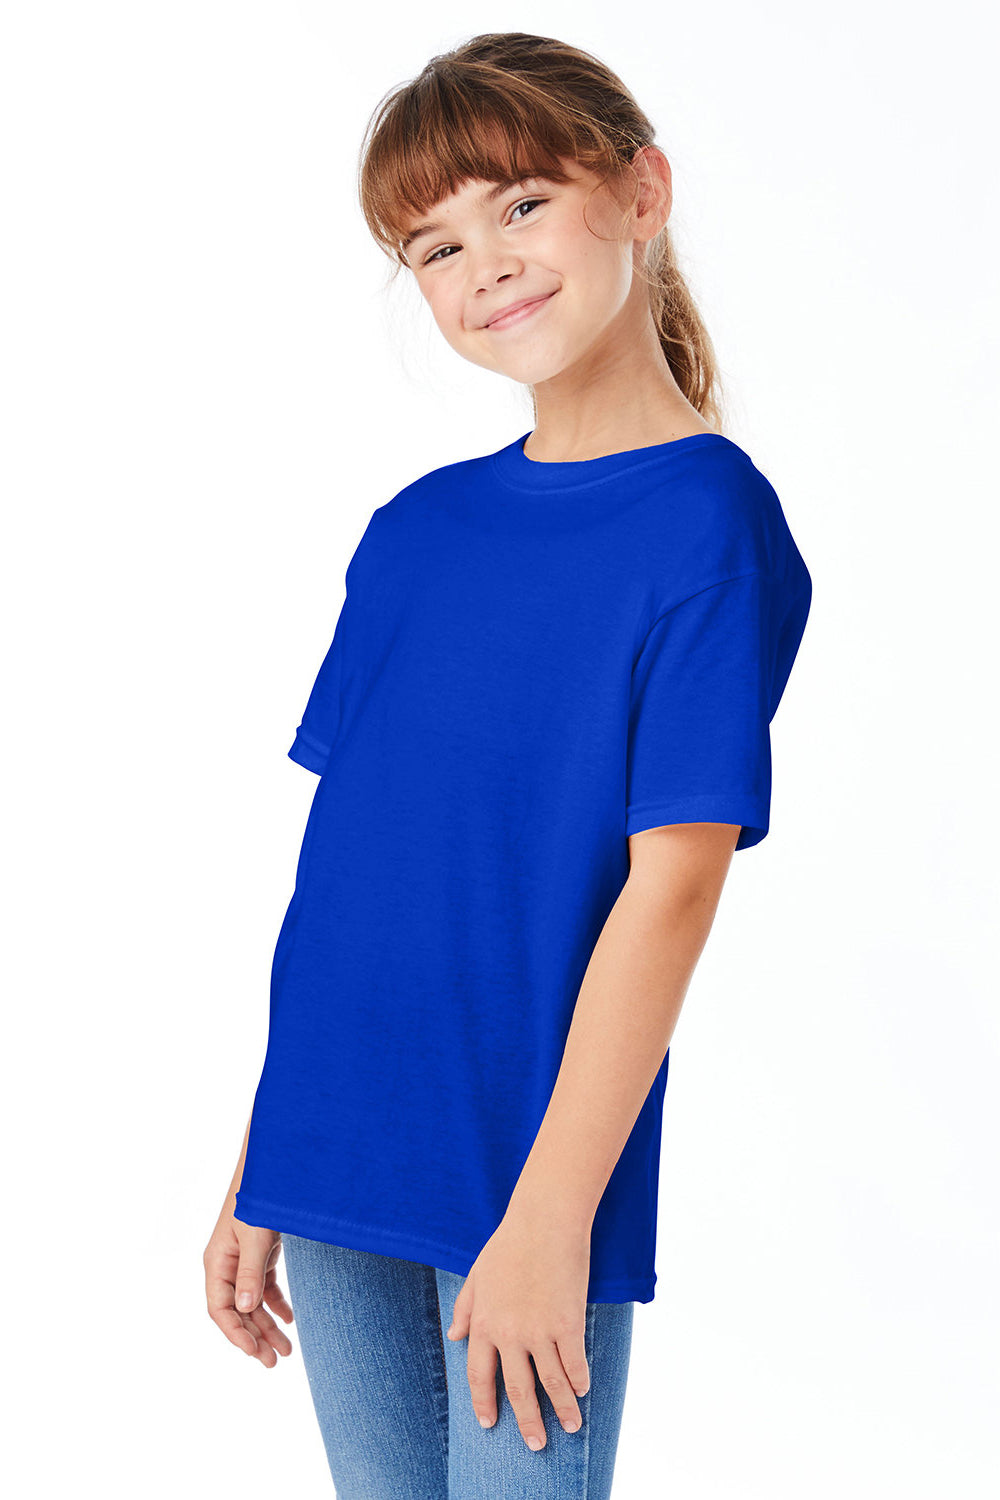 Hanes 5480 Youth ComfortSoft Short Sleeve Crewneck T-Shirt Athletic Royal Blue 3Q